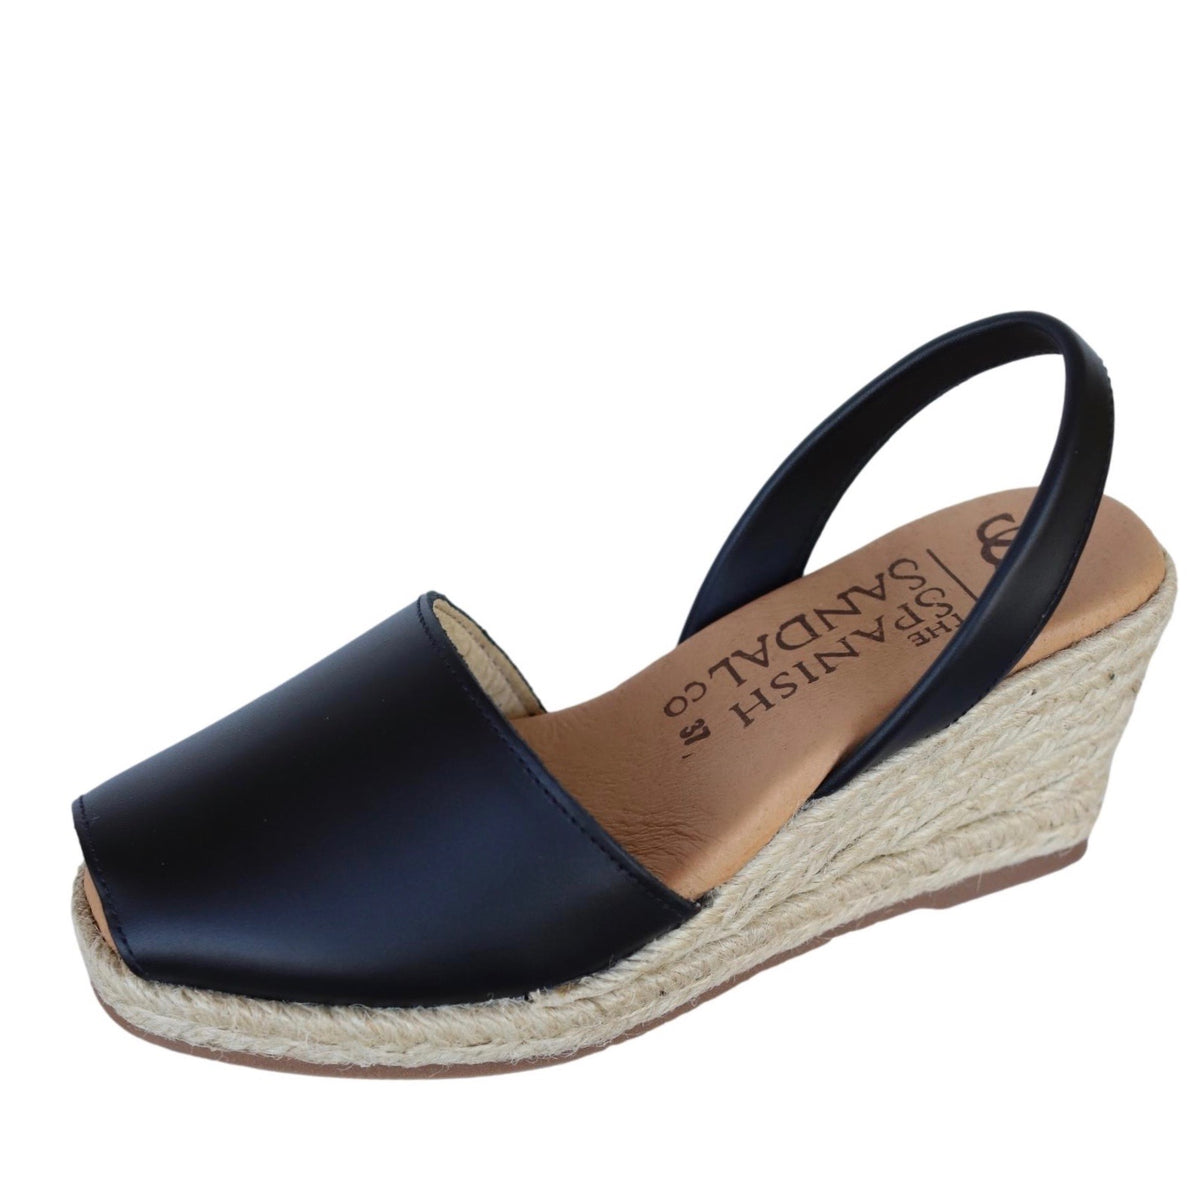 Black espadrille wedge sandals CLOUD - The Spanish Sandal Company